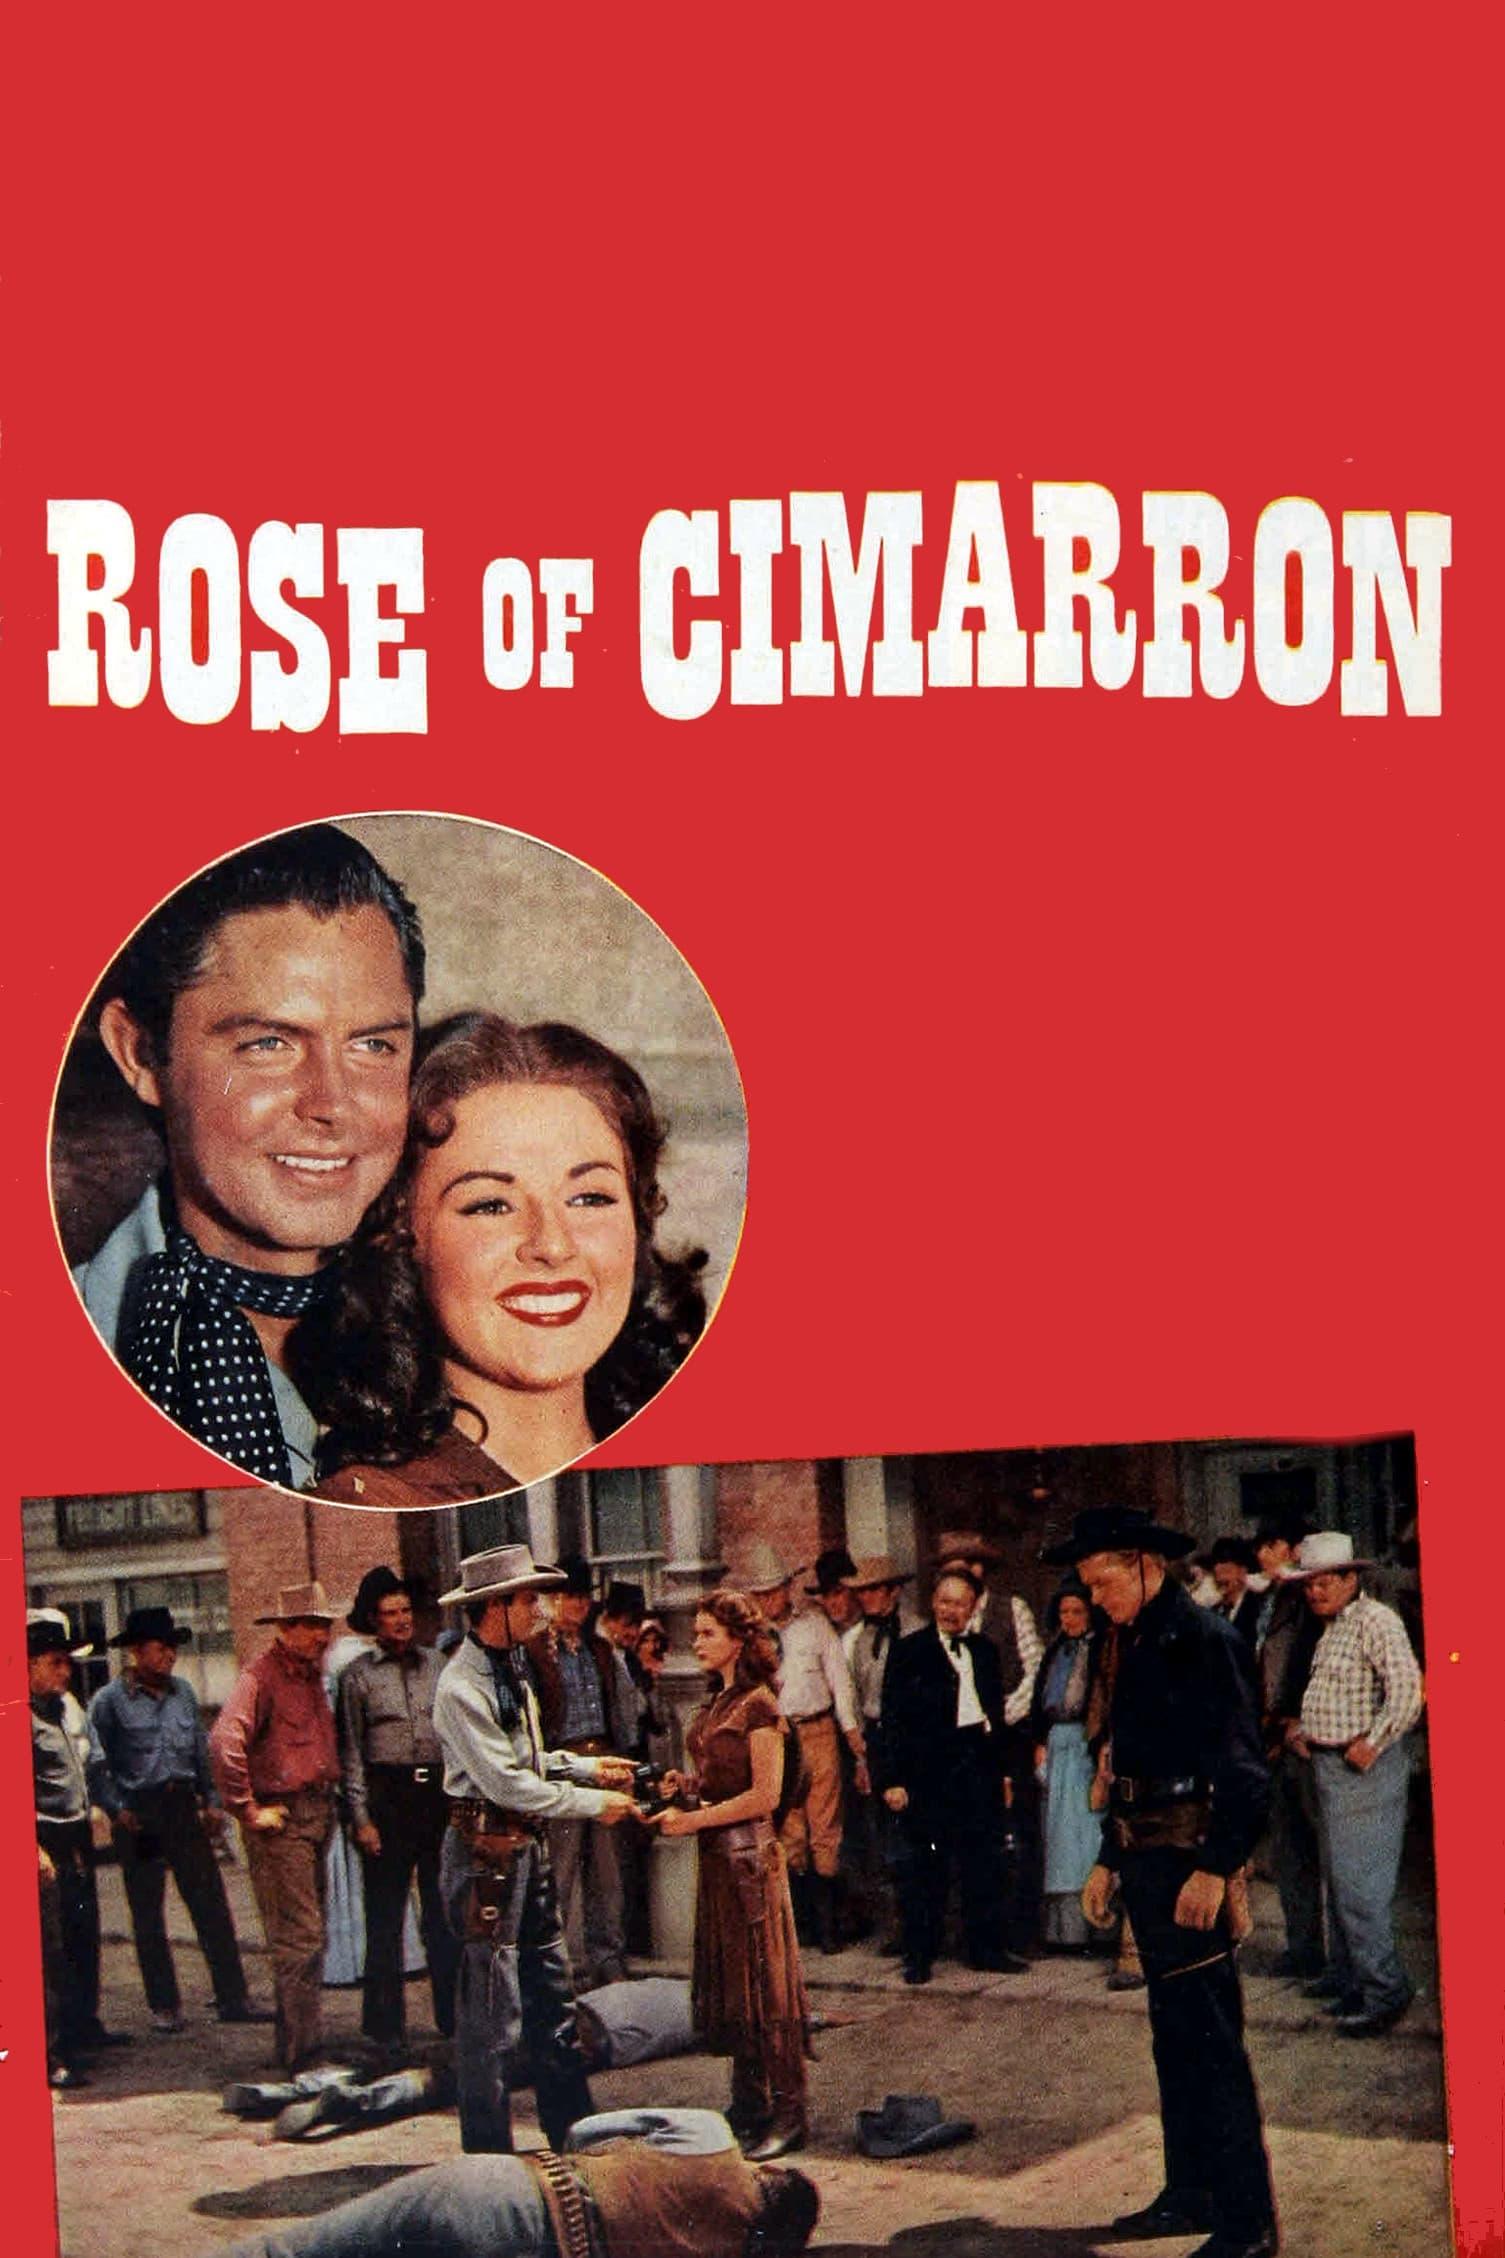 Rose of Cimarron poster